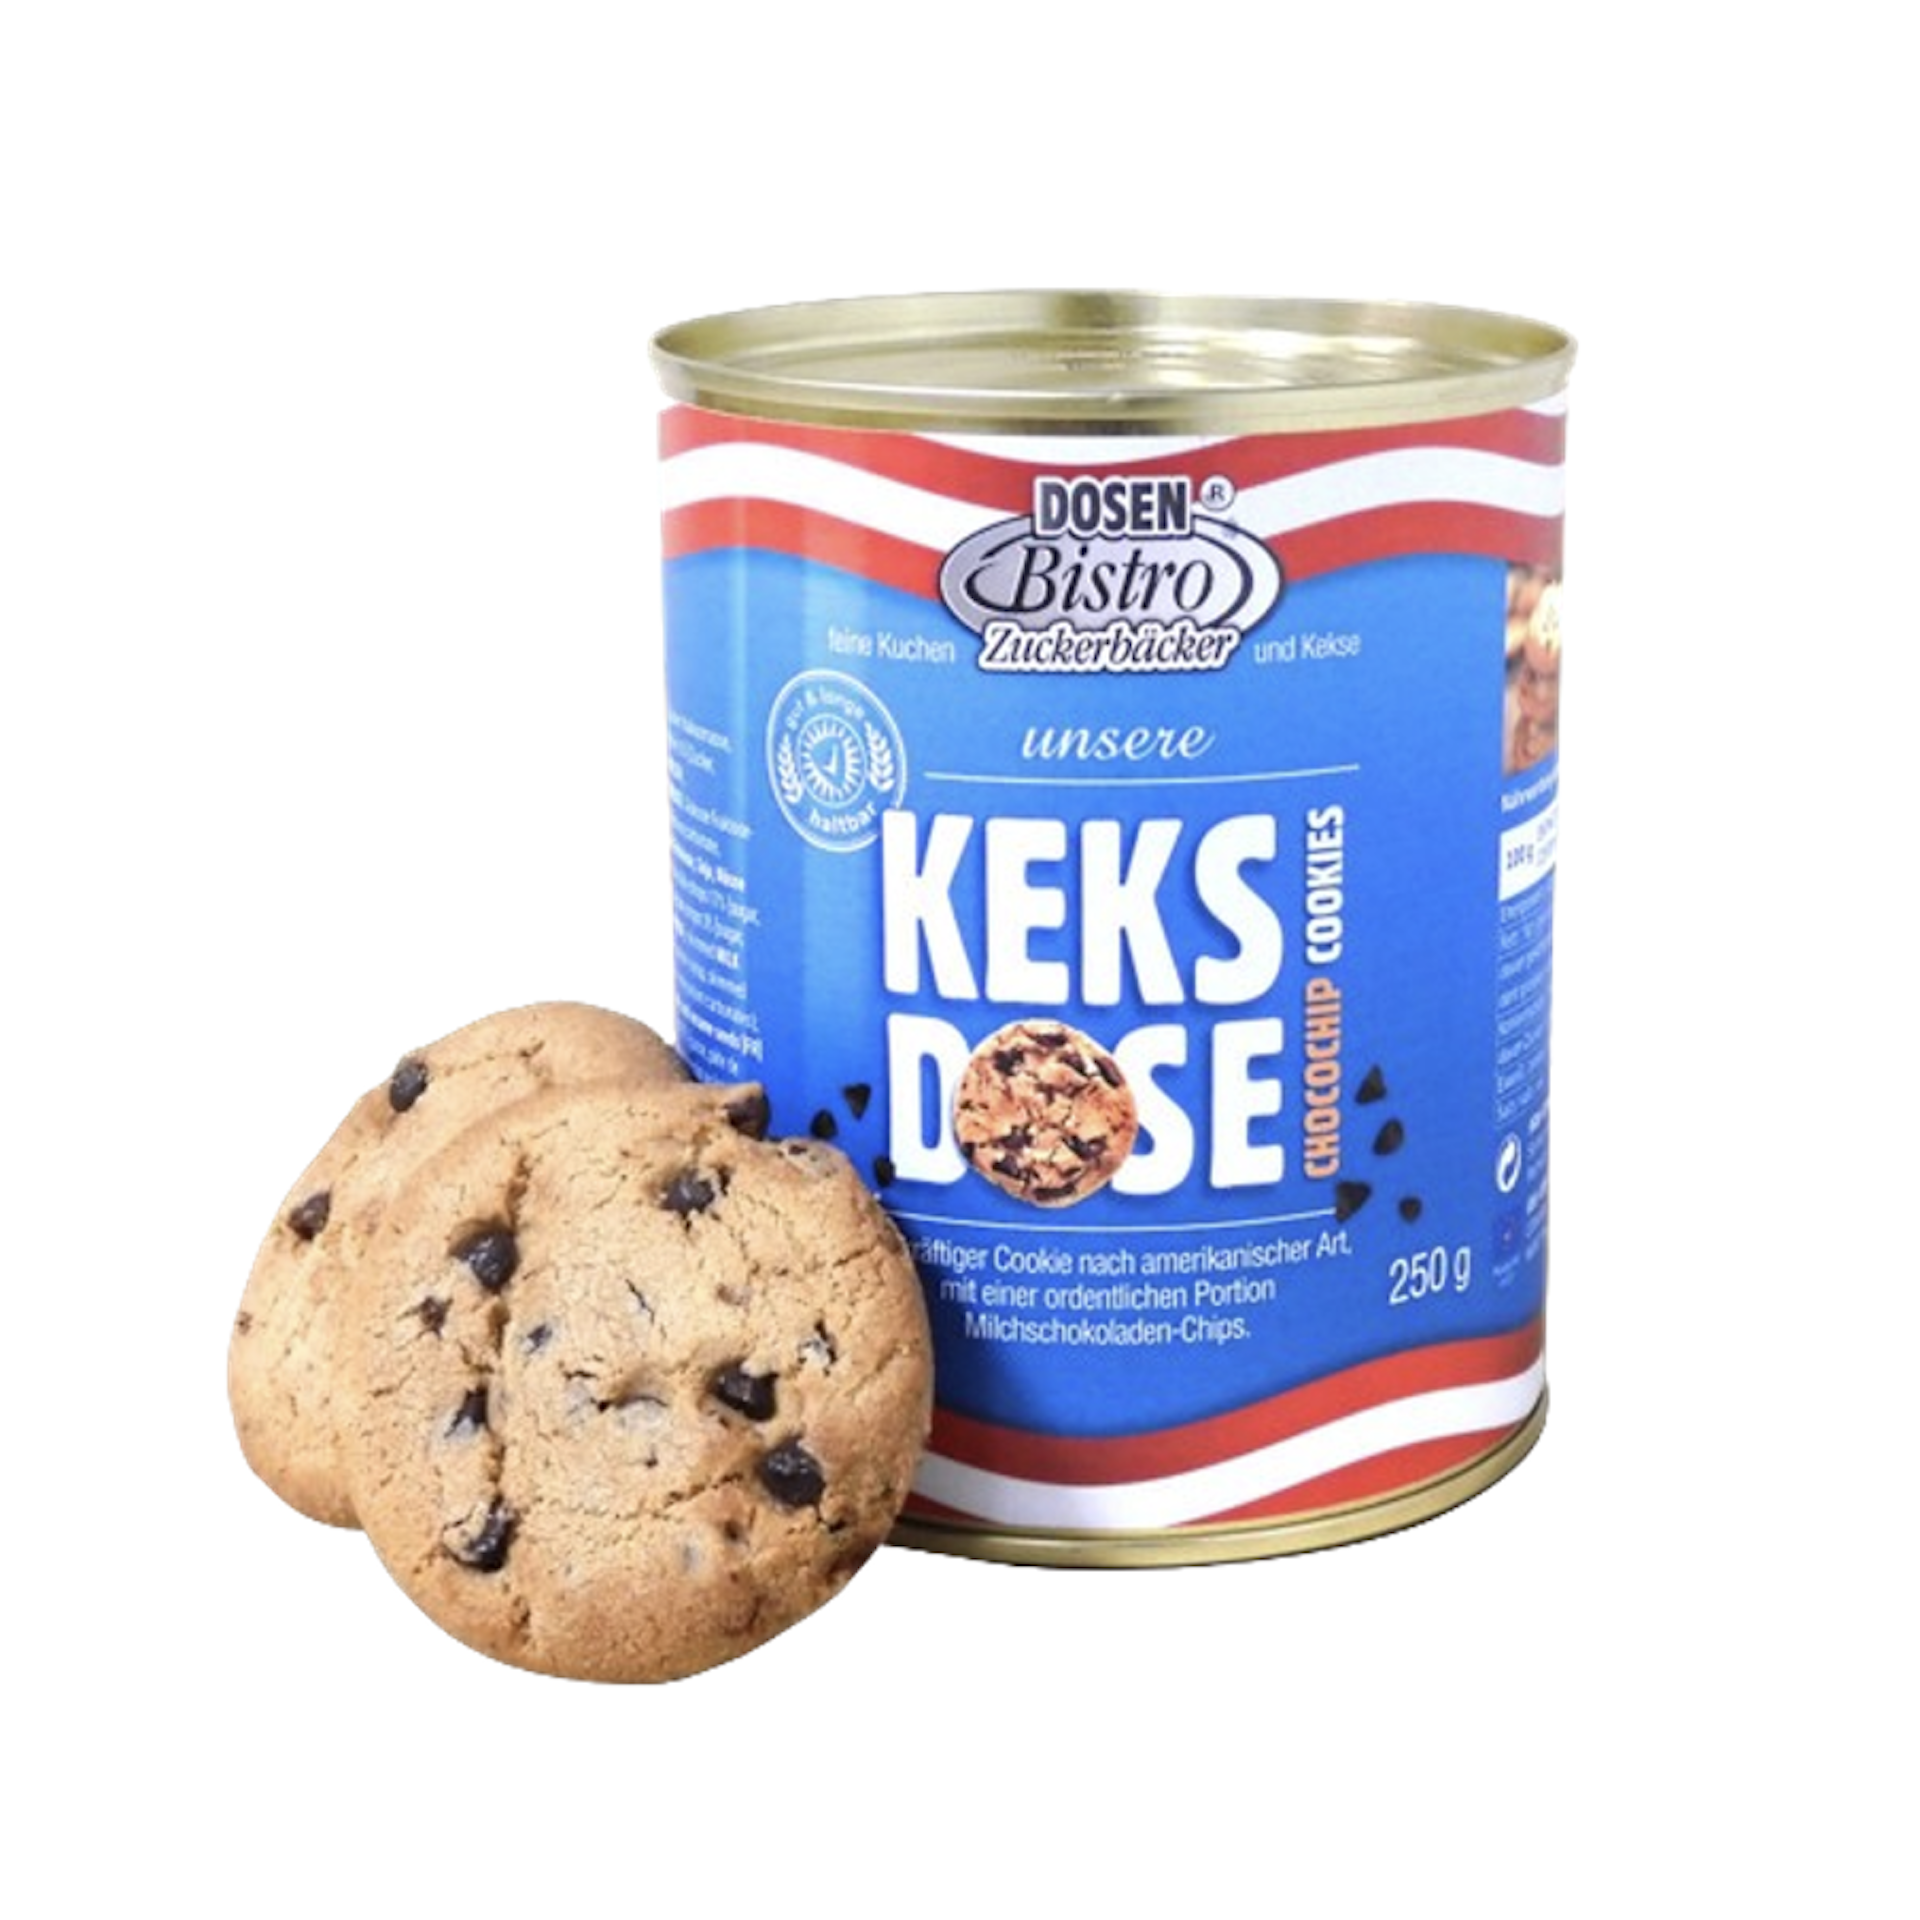 CONVAR DOSENBISTRO Keksdose Cookies mit Choco-Chips (250g) 